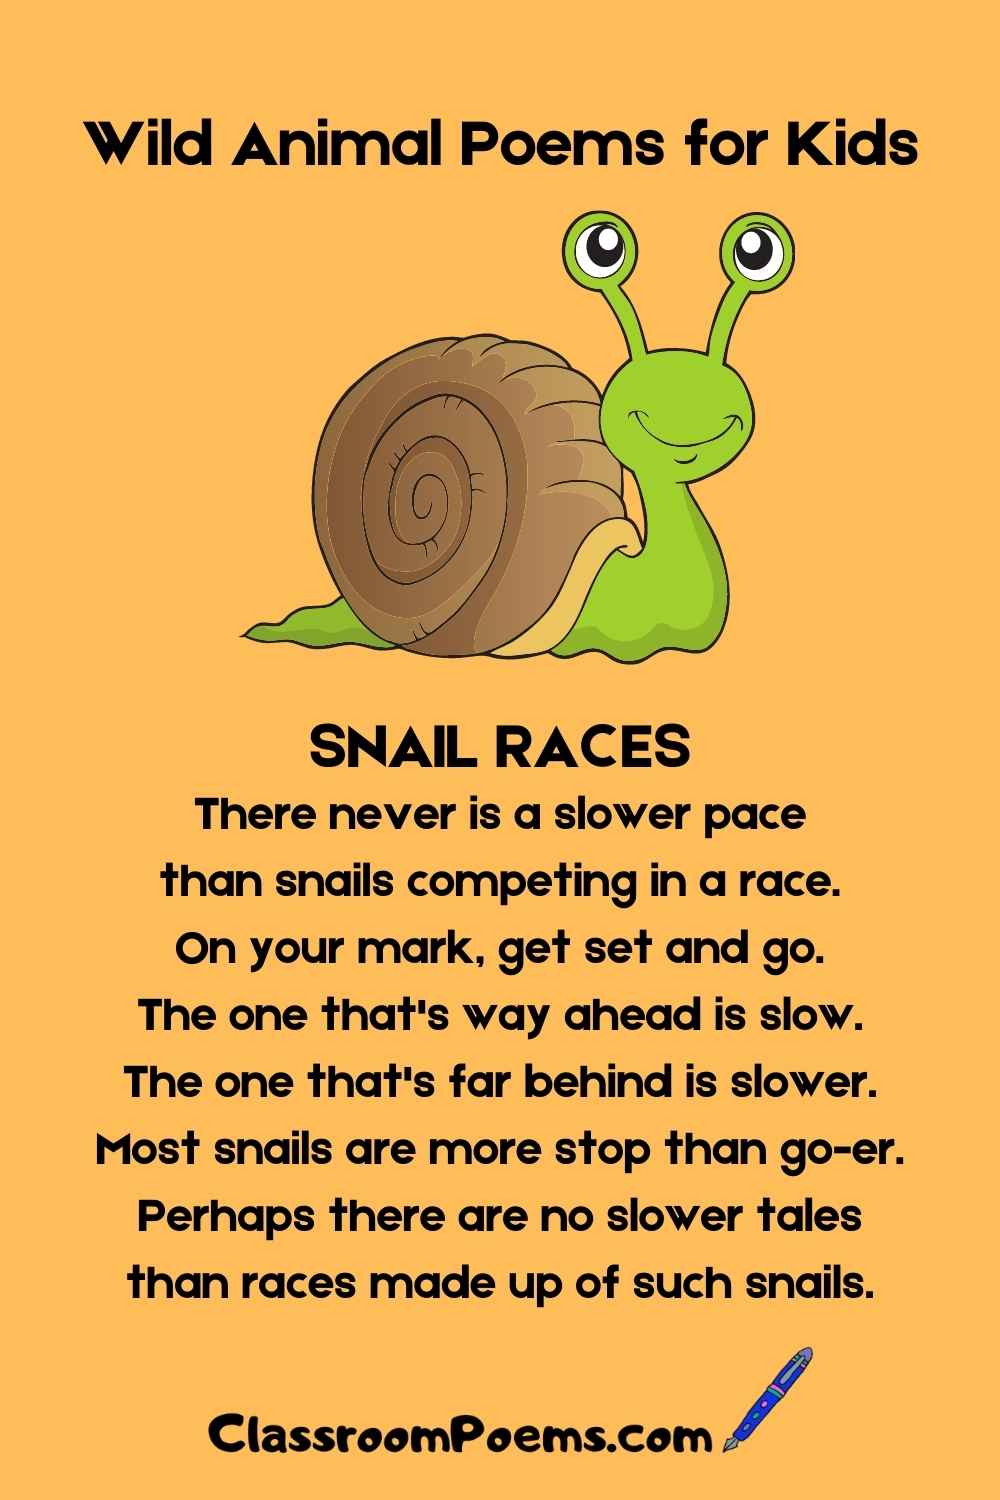 Snail poem, wild animal poems for kids on ClassroomPoems.com